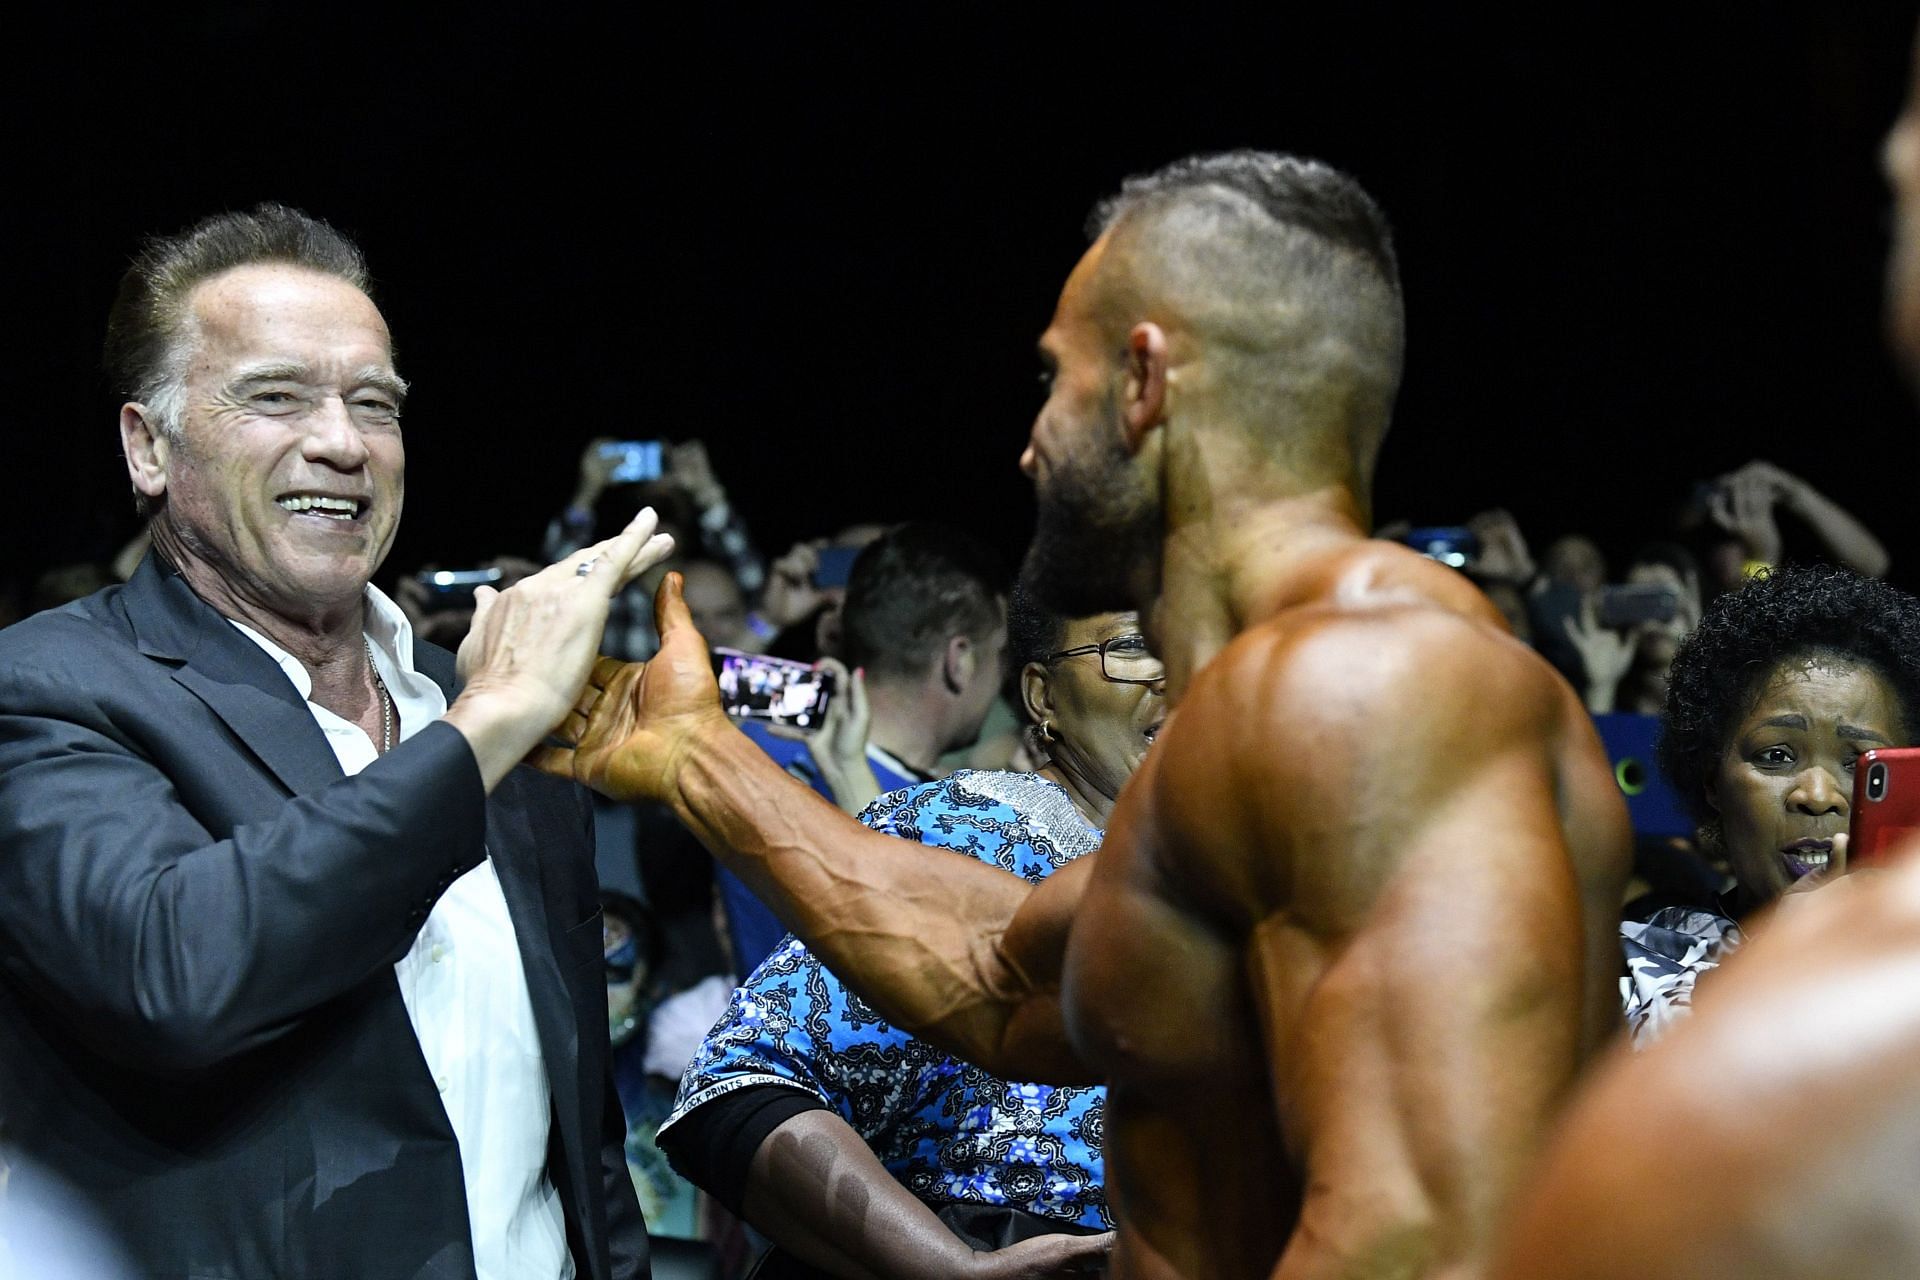 Arnold Schwarzenegger at the Arnold Sports Festival Africa 2019 